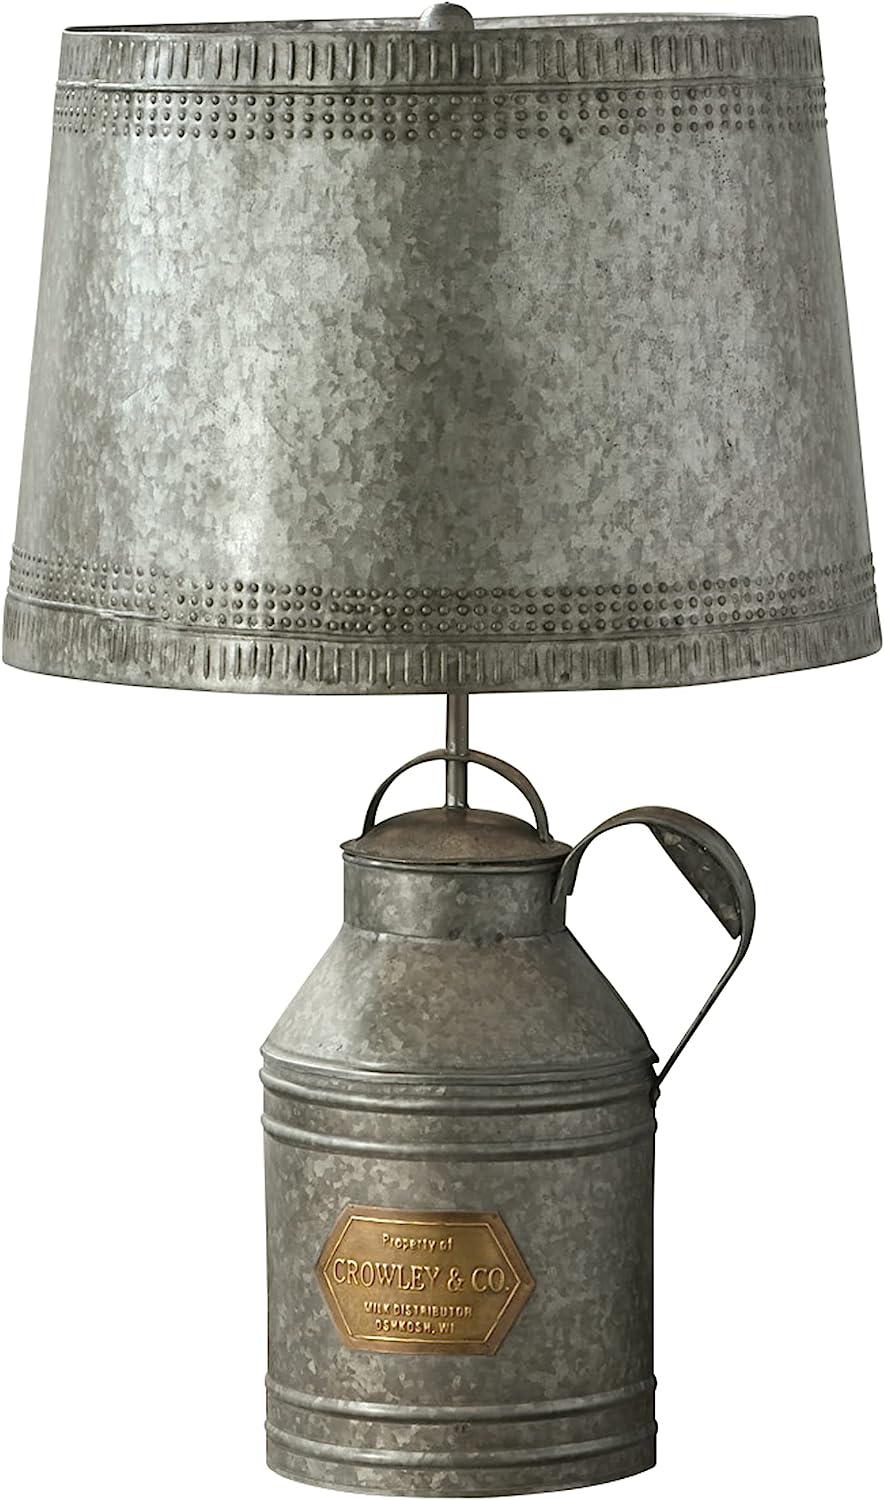 Antique Milkcan Lamp With Tin Shade - Park Designs